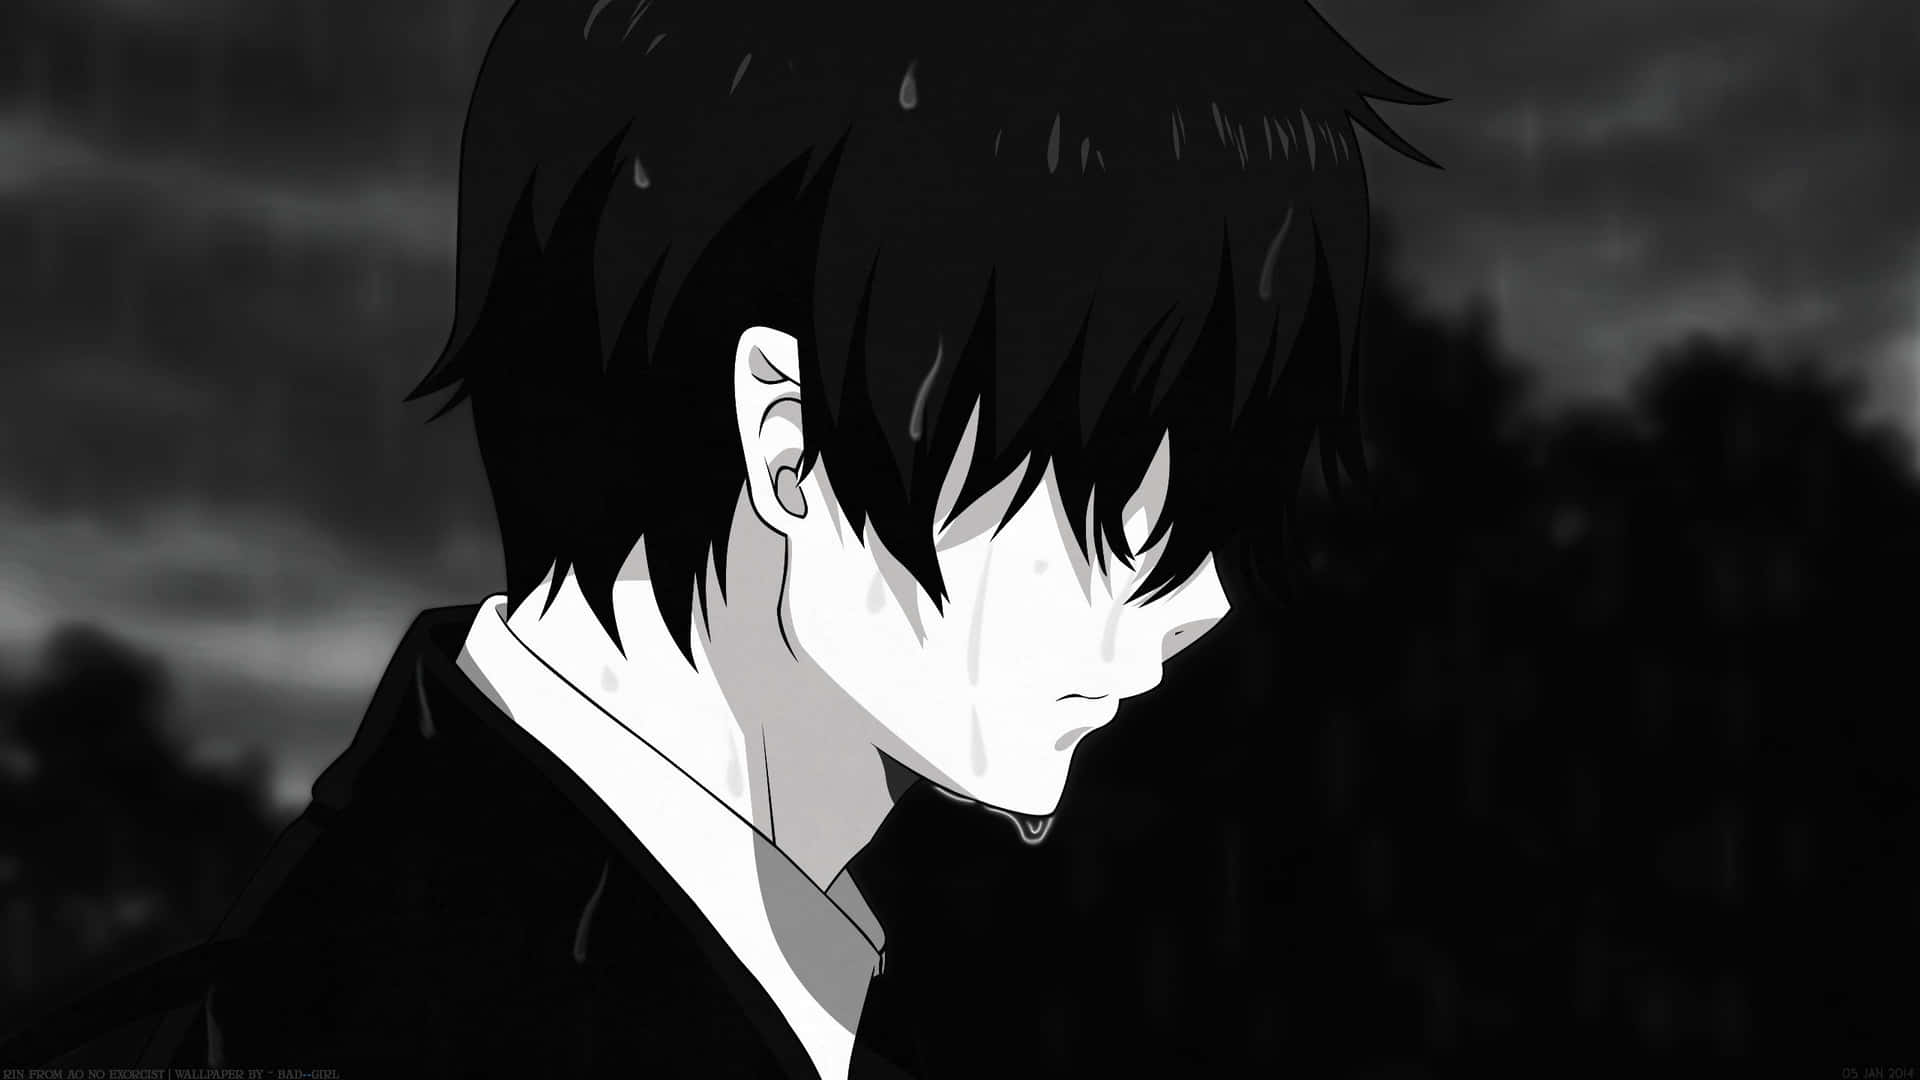 A Sad Crying Anime Girl Feeling Alone Wallpaper